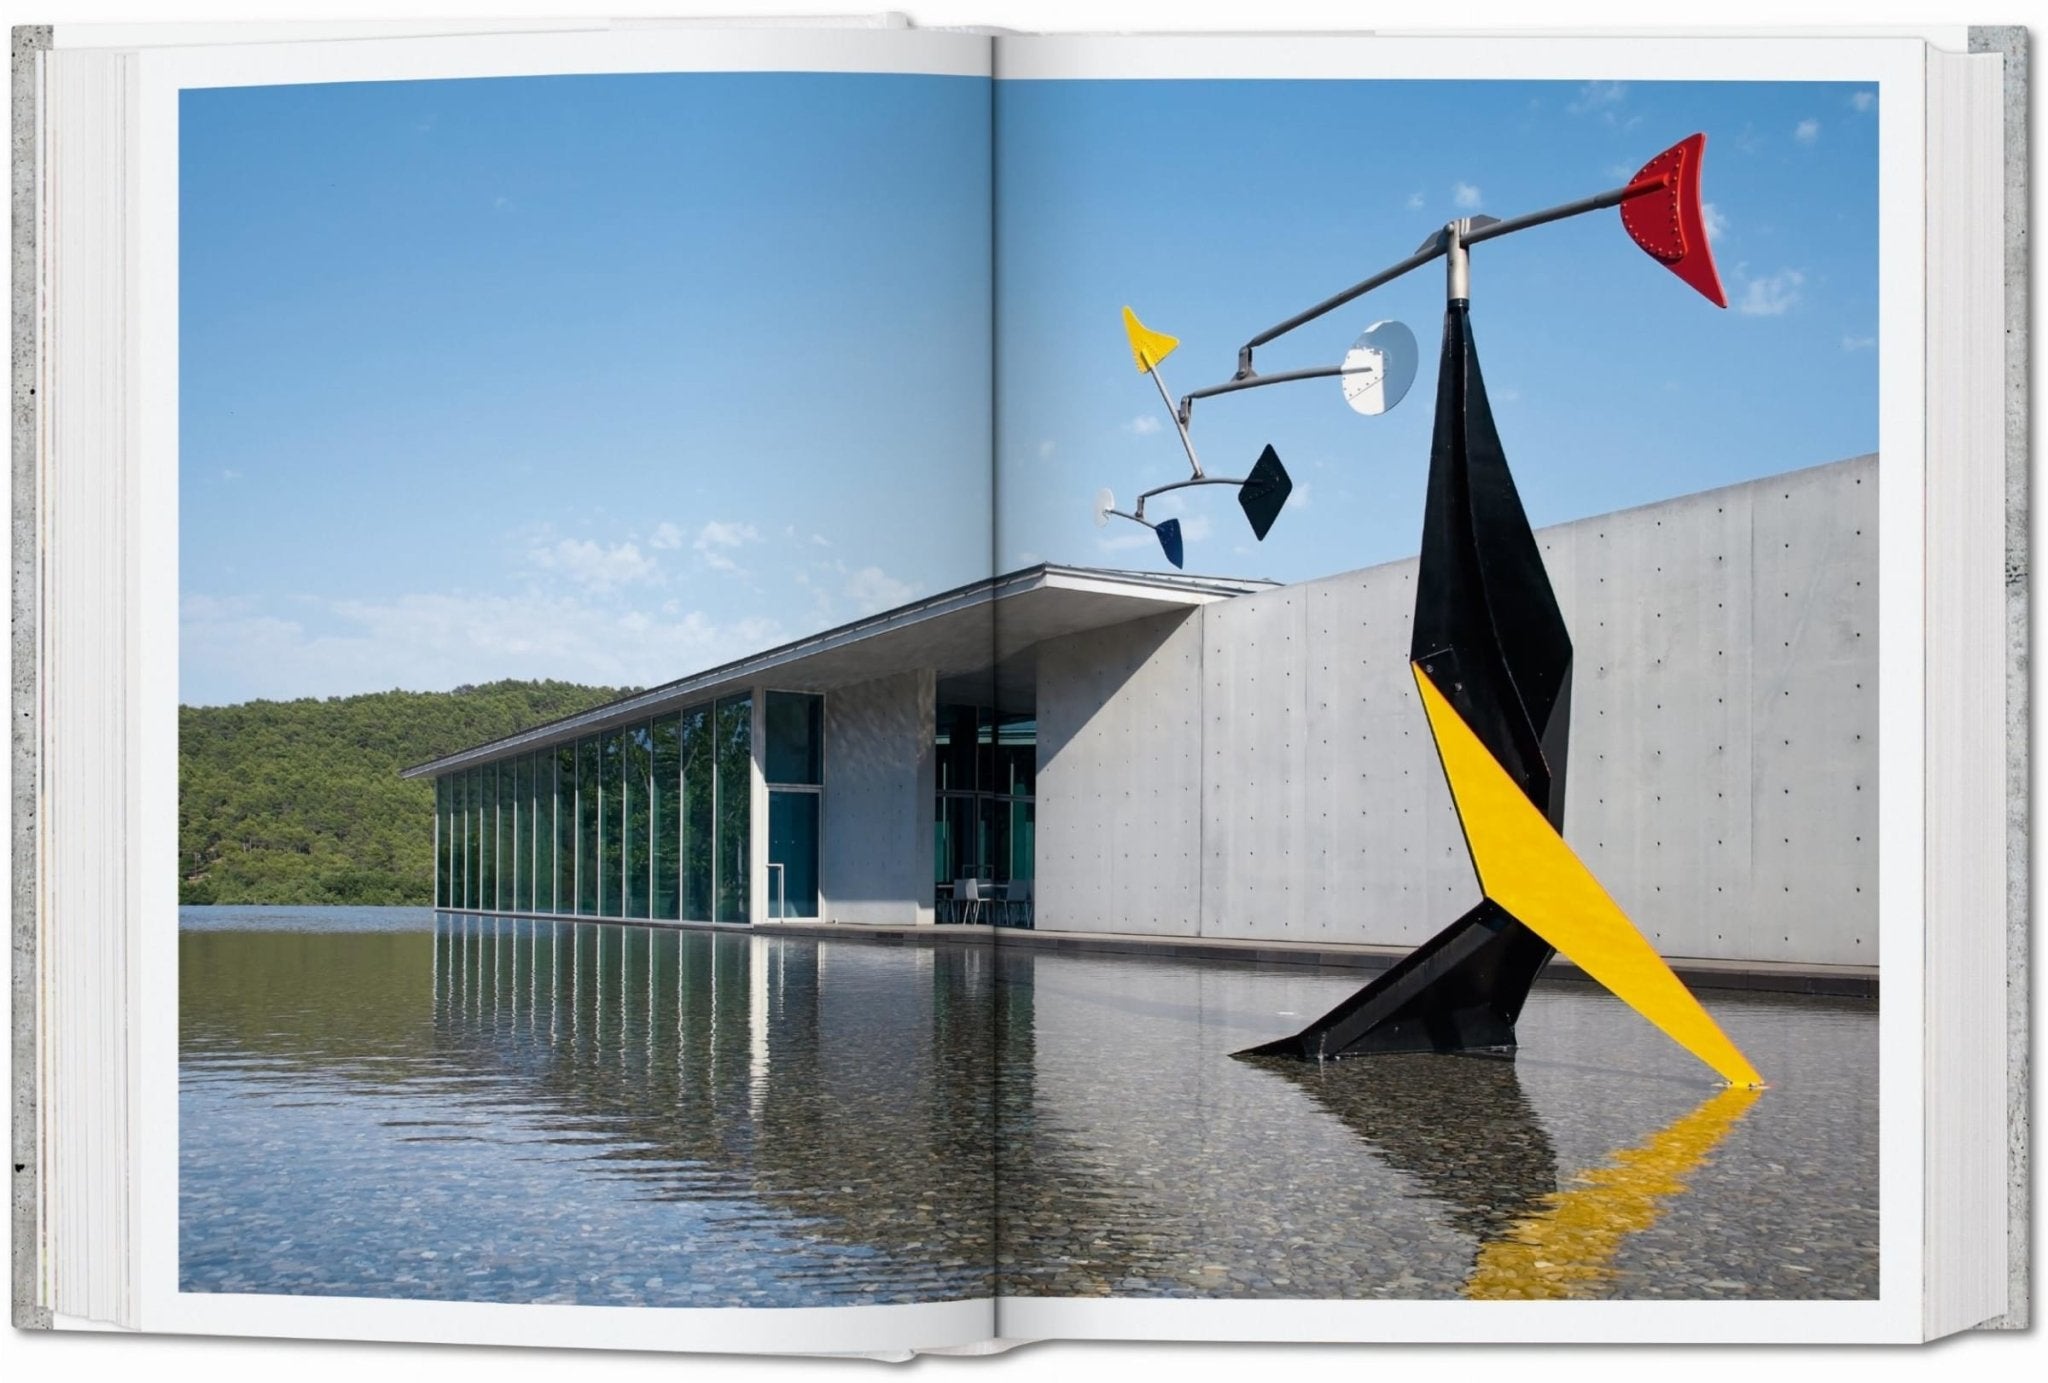 Contemporary Concrete Buildings Non-fiction books from Taschen Verlag